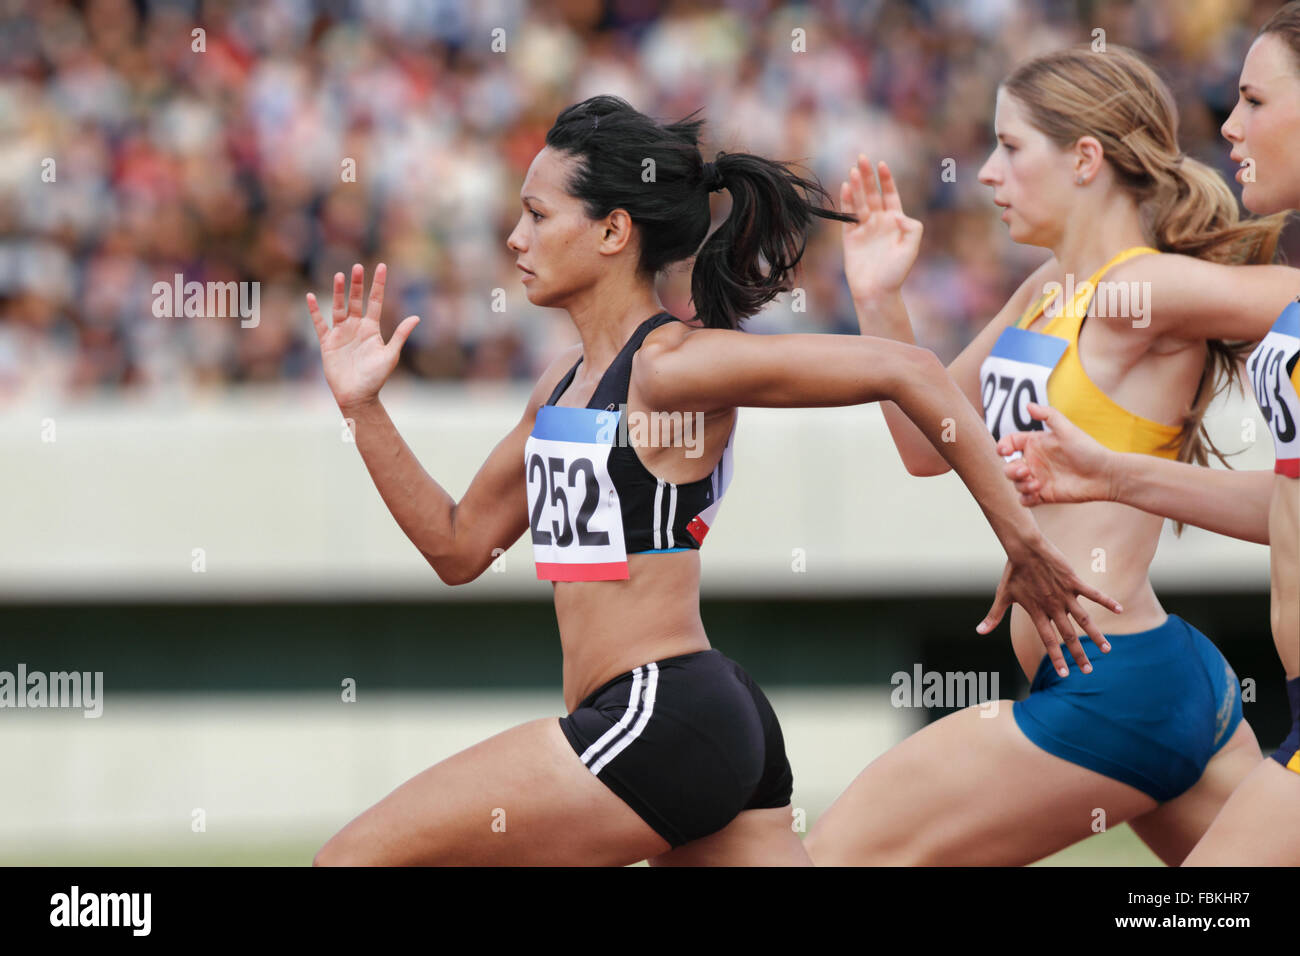 Athletes running on running track Stock Photo